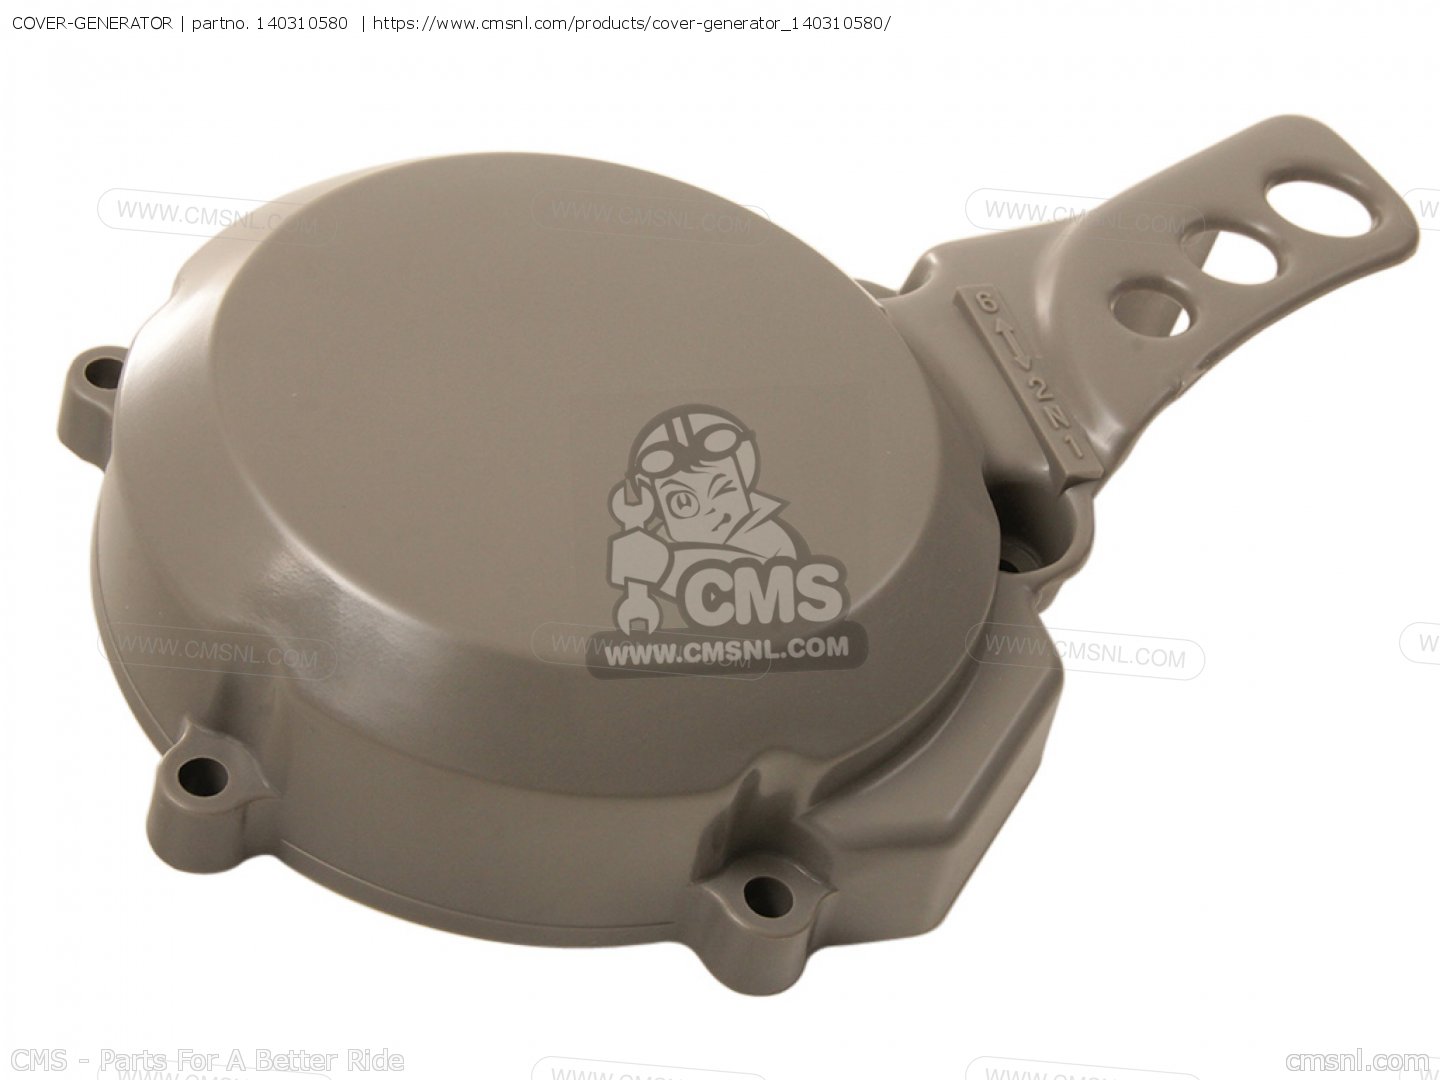 140310580: Cover-generator Kawasaki - buy the 14031-0580 at CMSNL